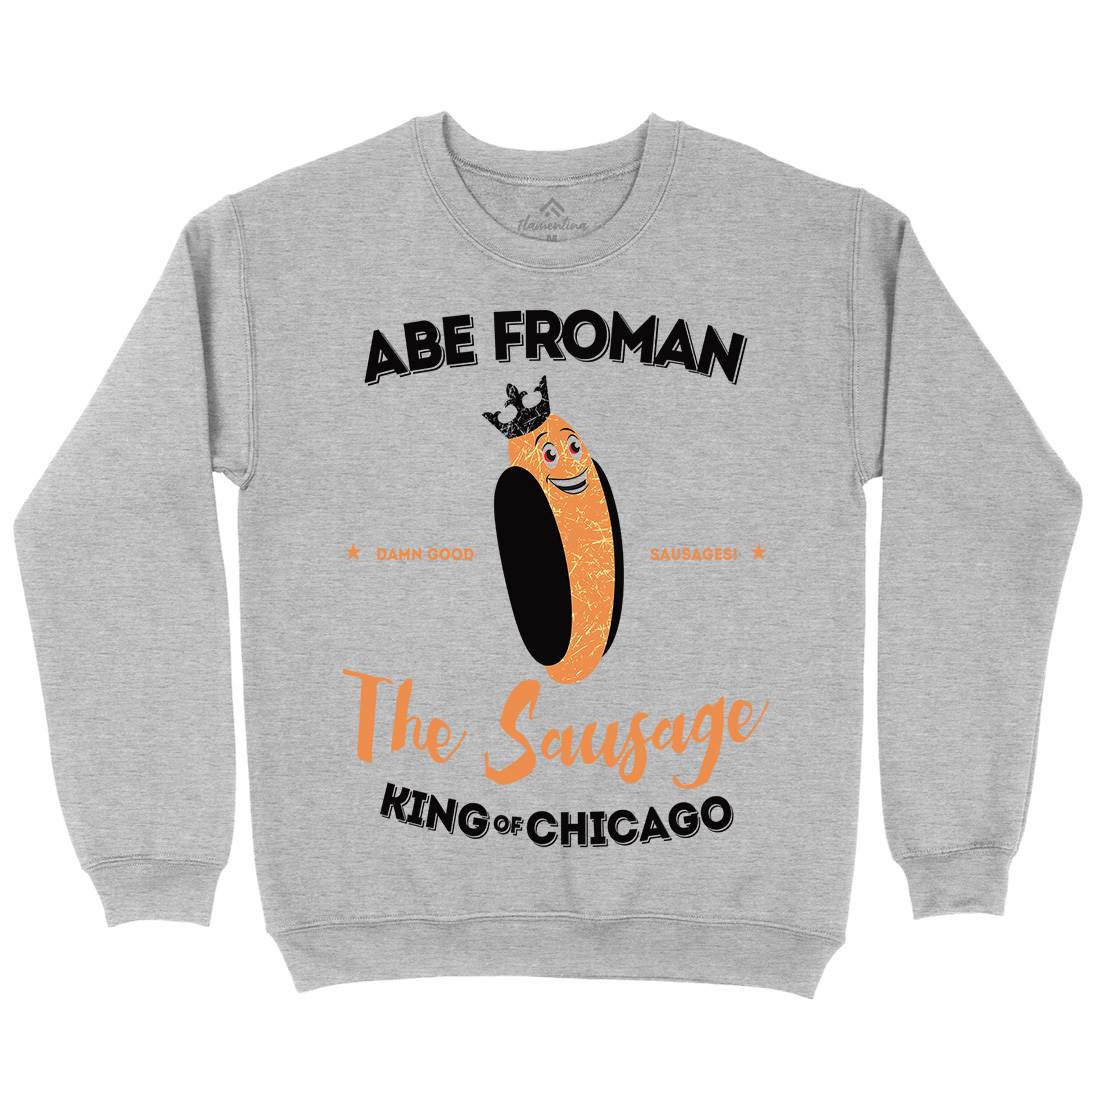 Abe Froman Kids Crew Neck Sweatshirt Food D372